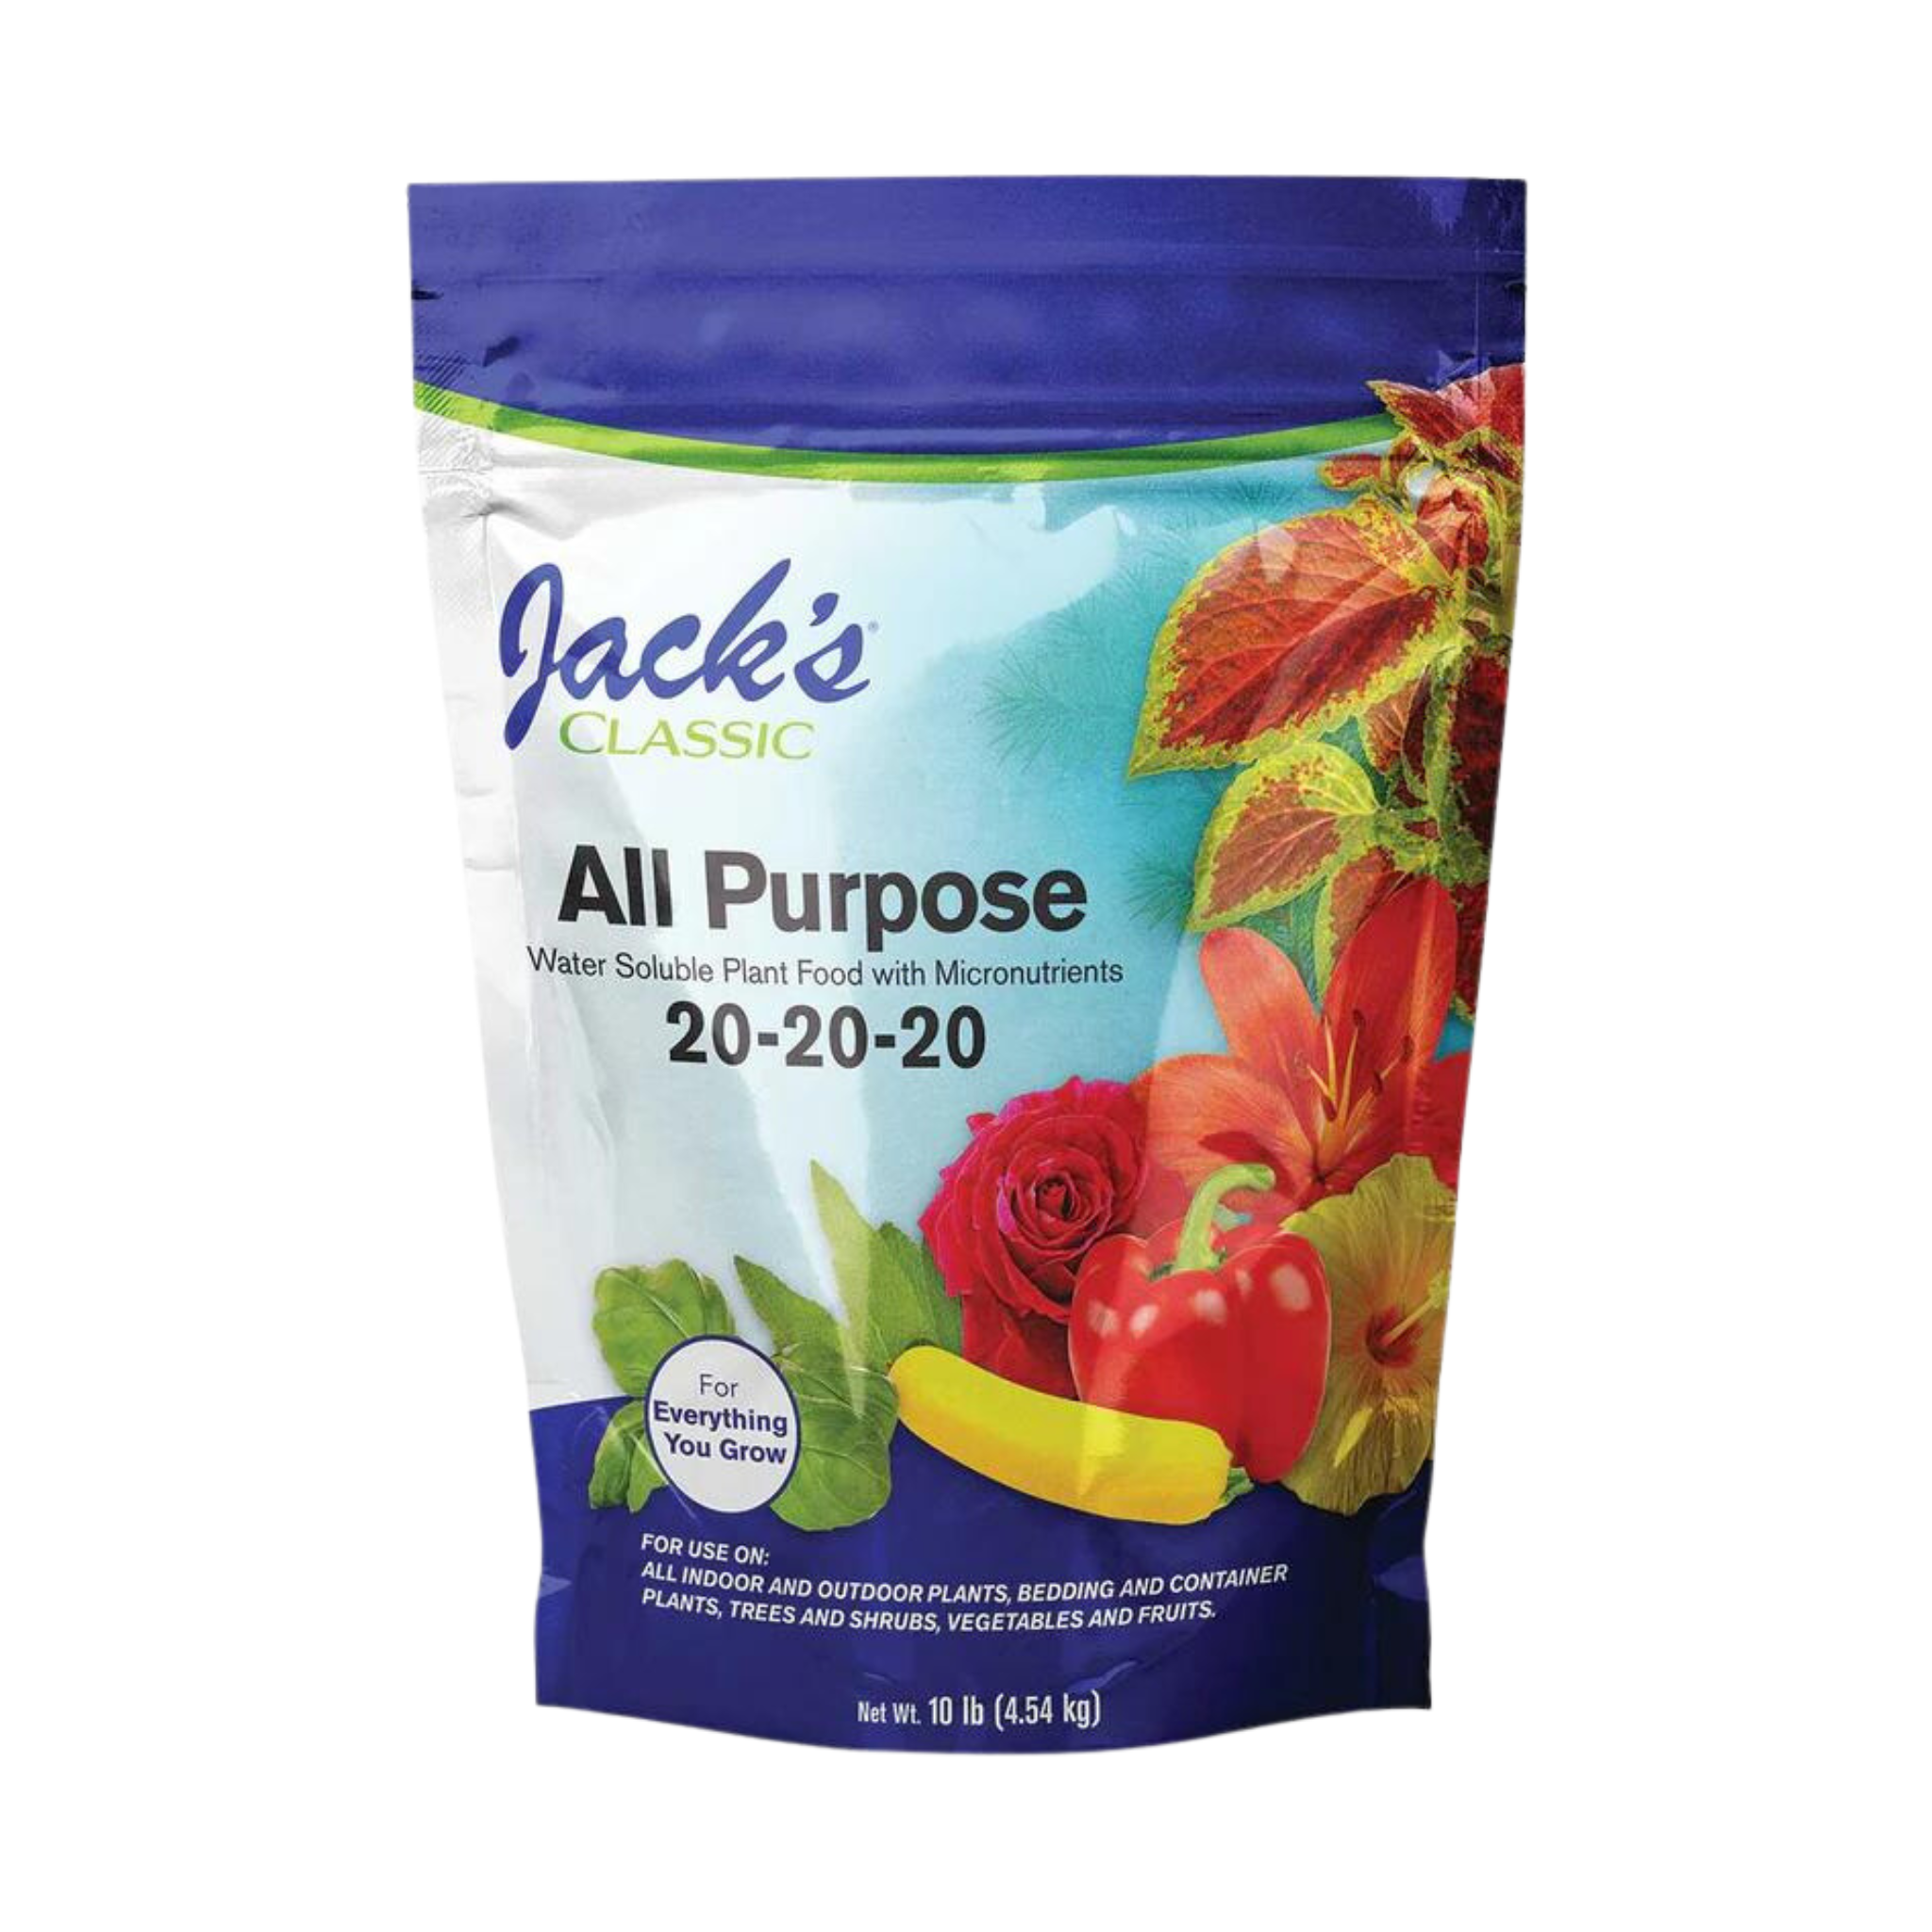 Jack's Classic All Purpose 20-20-20